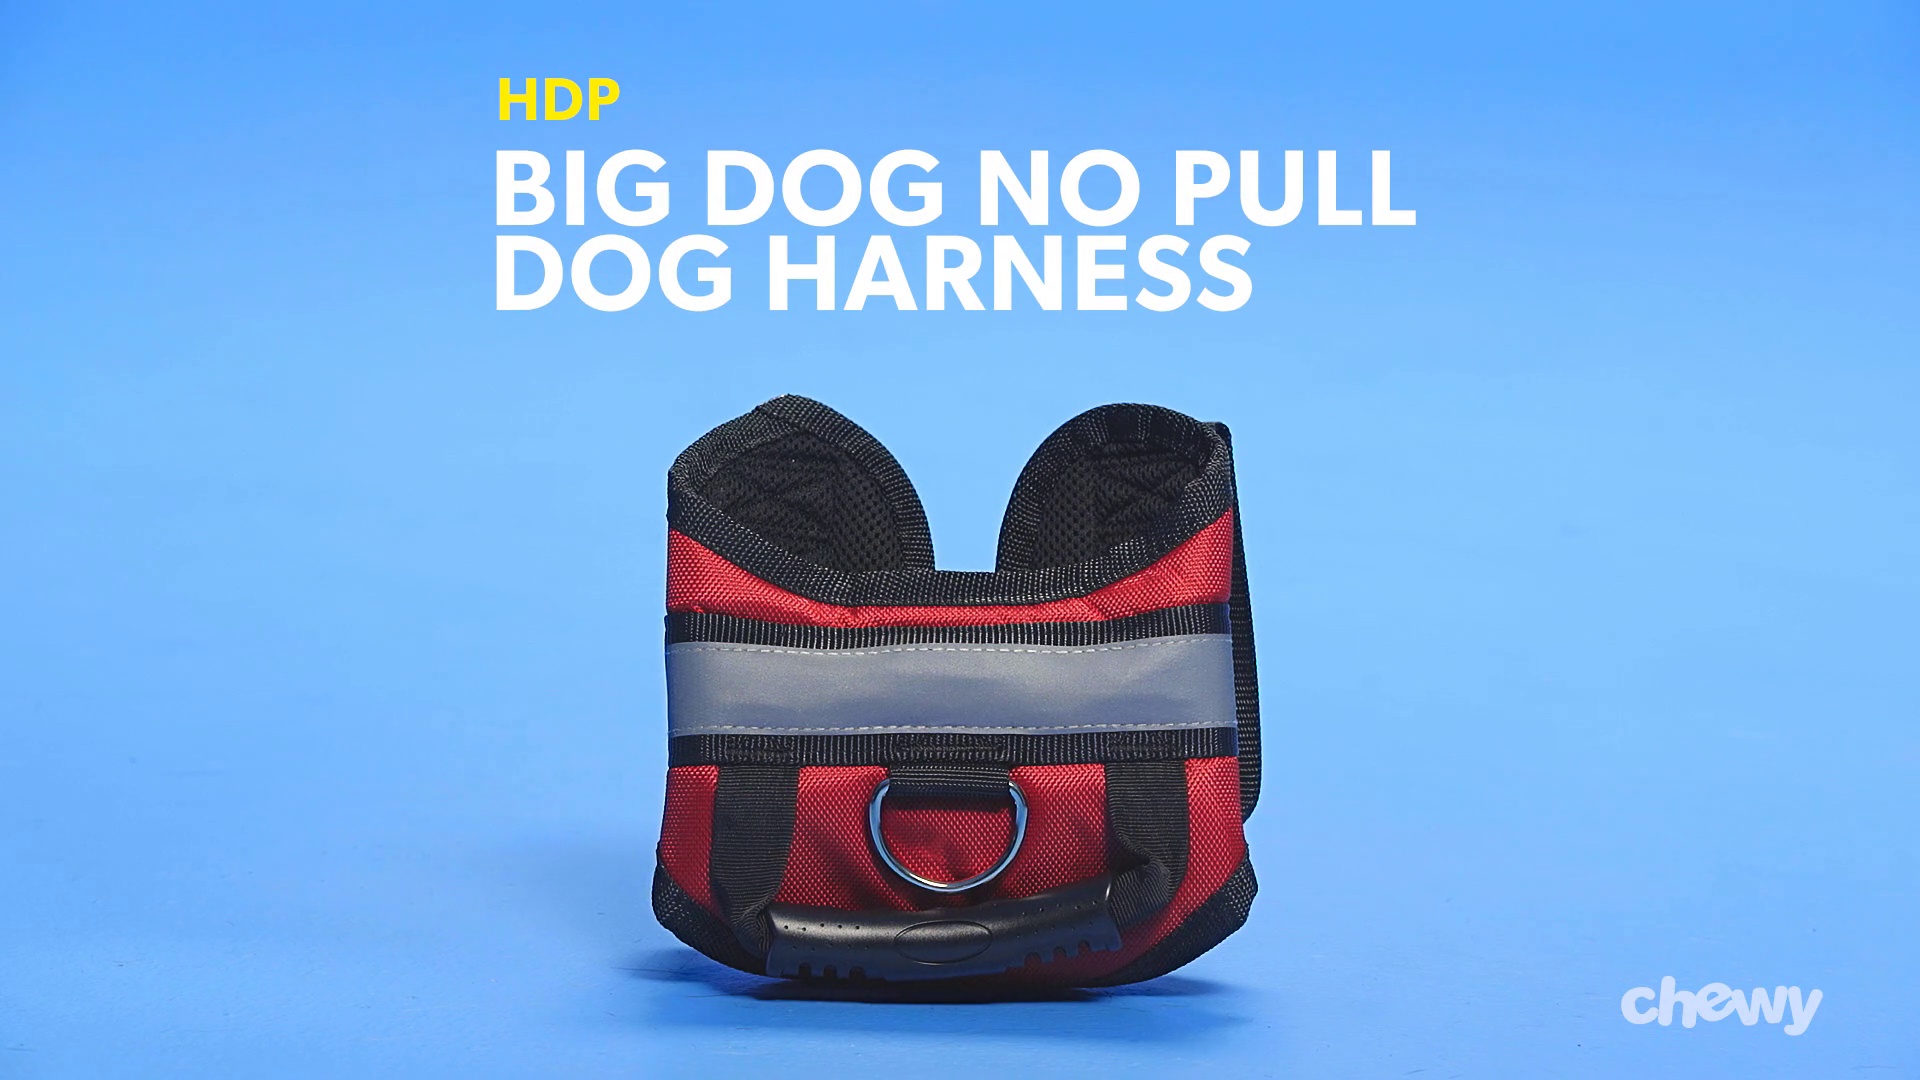 hdp no pull dog harness